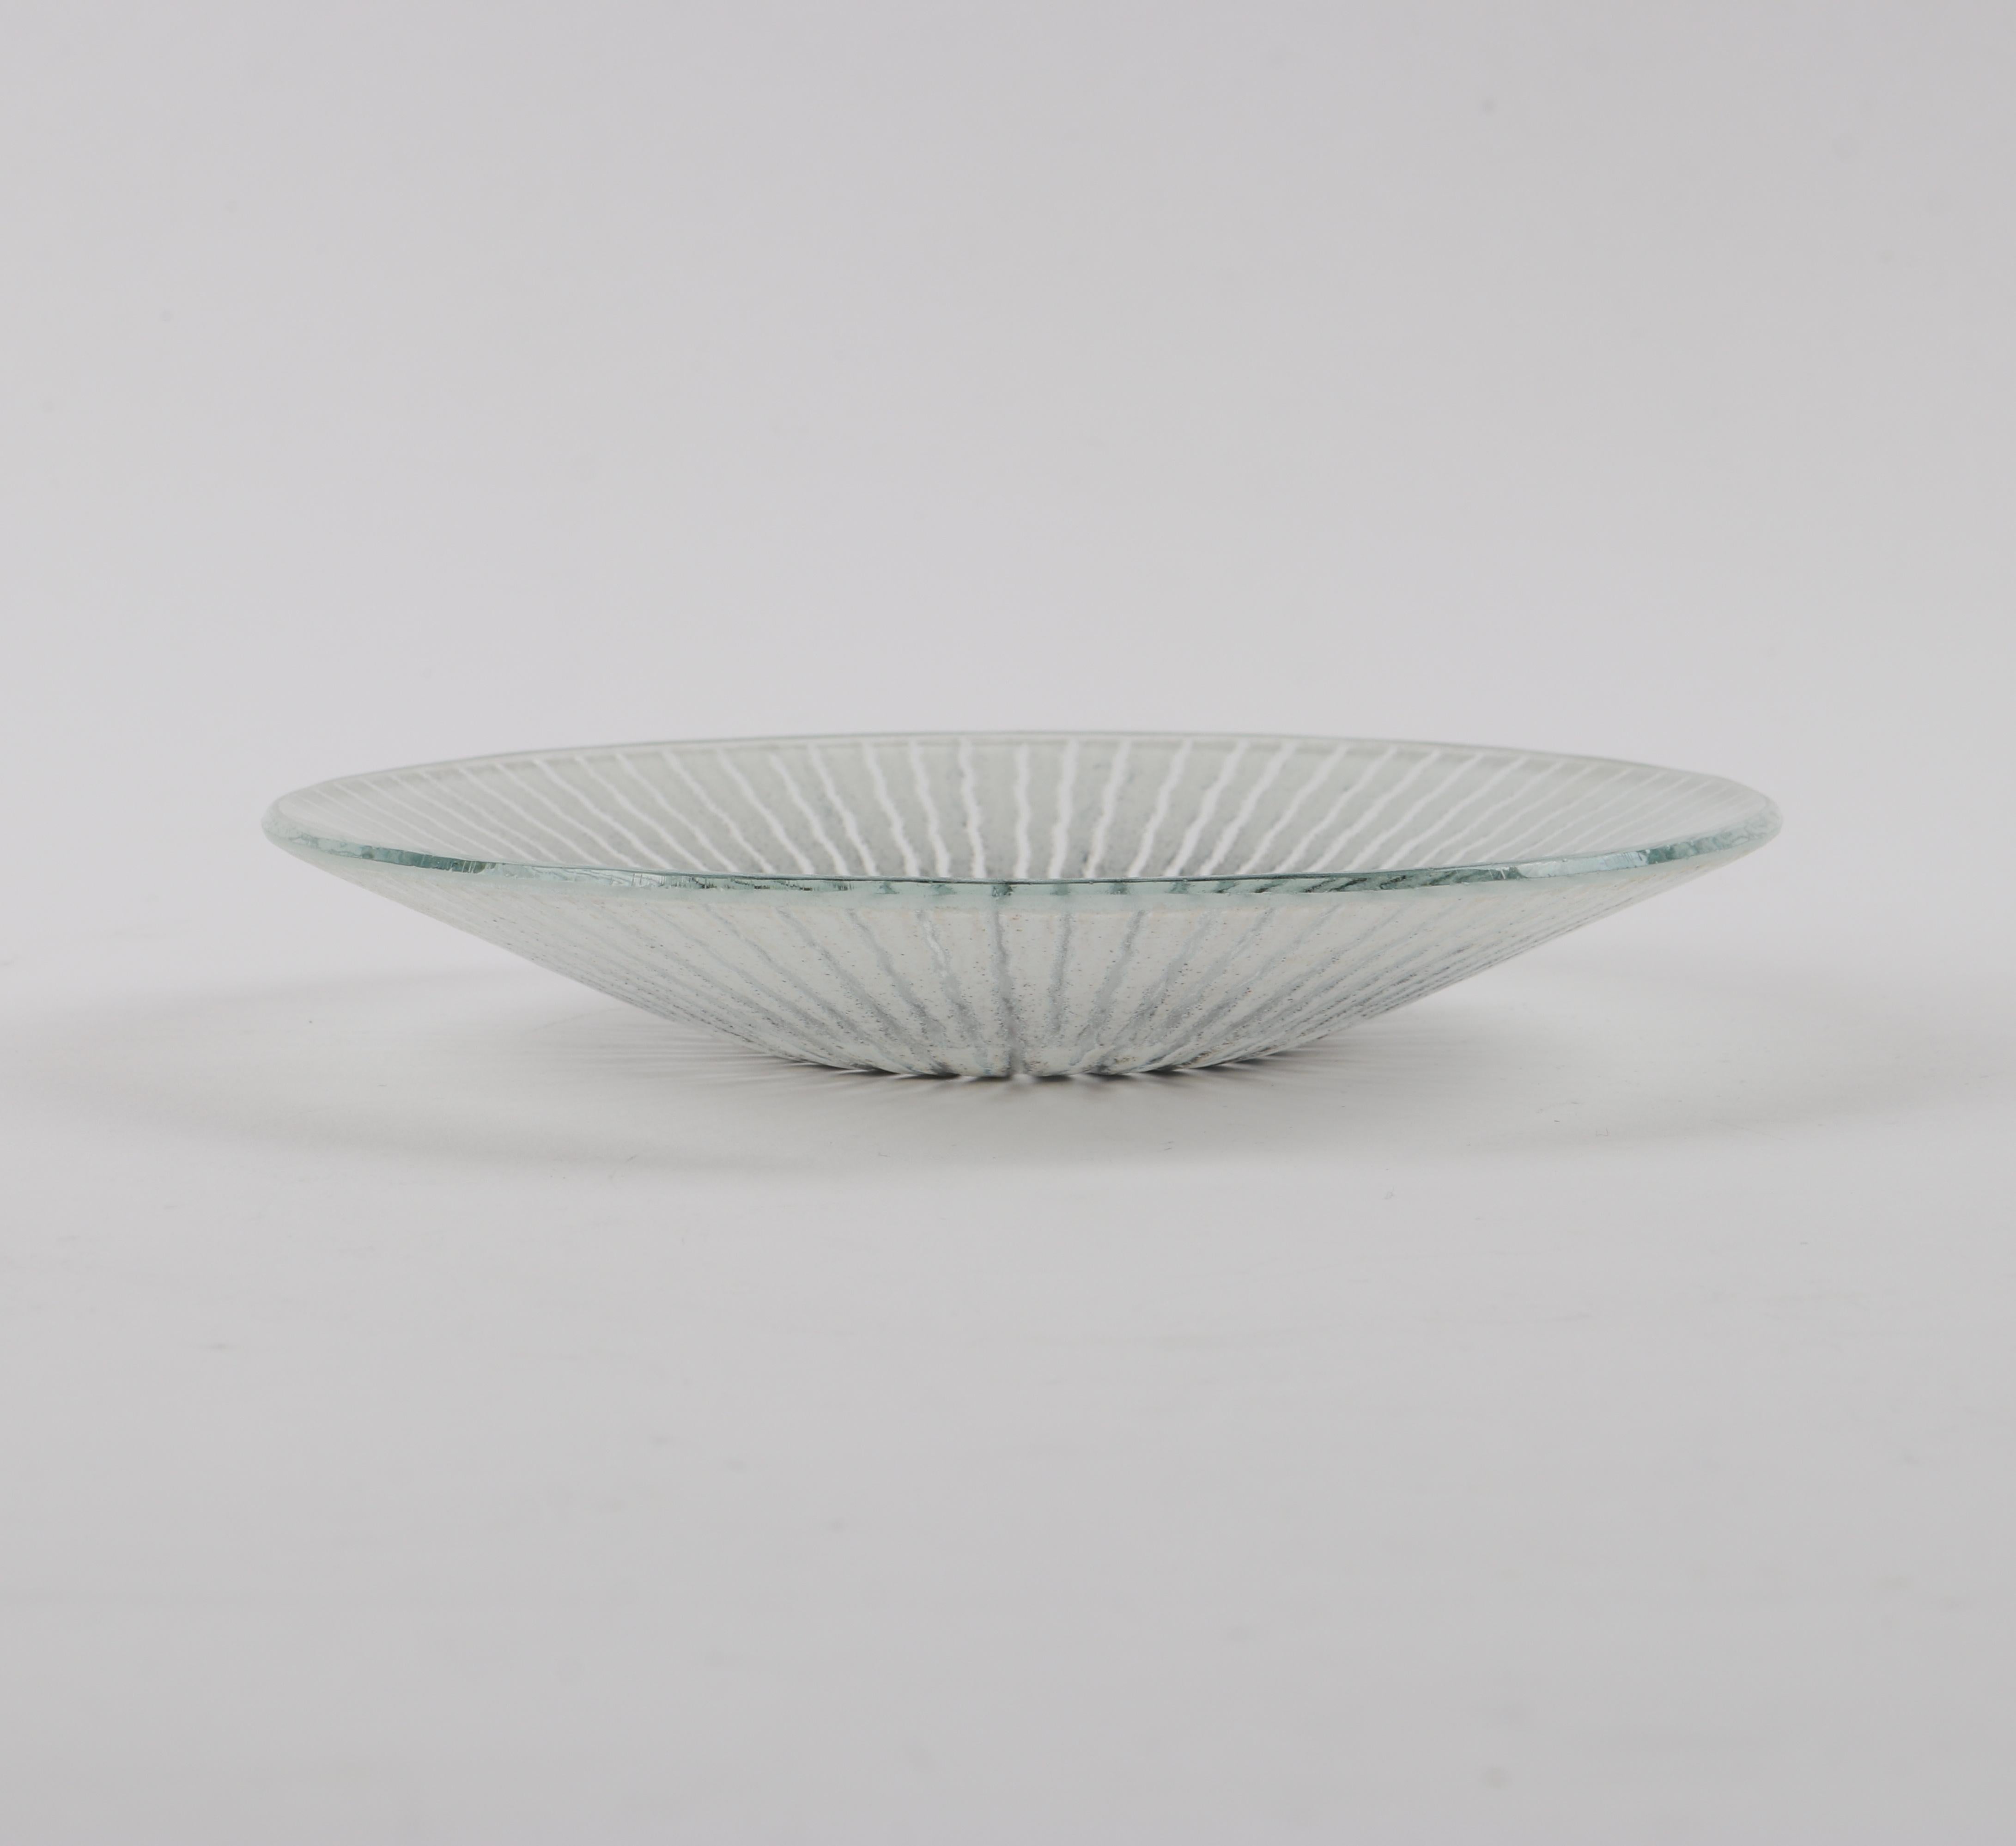 Maurice Heaton c.1970s Signed Modernist Starburst Art Glass Enameled Dish Plate 2